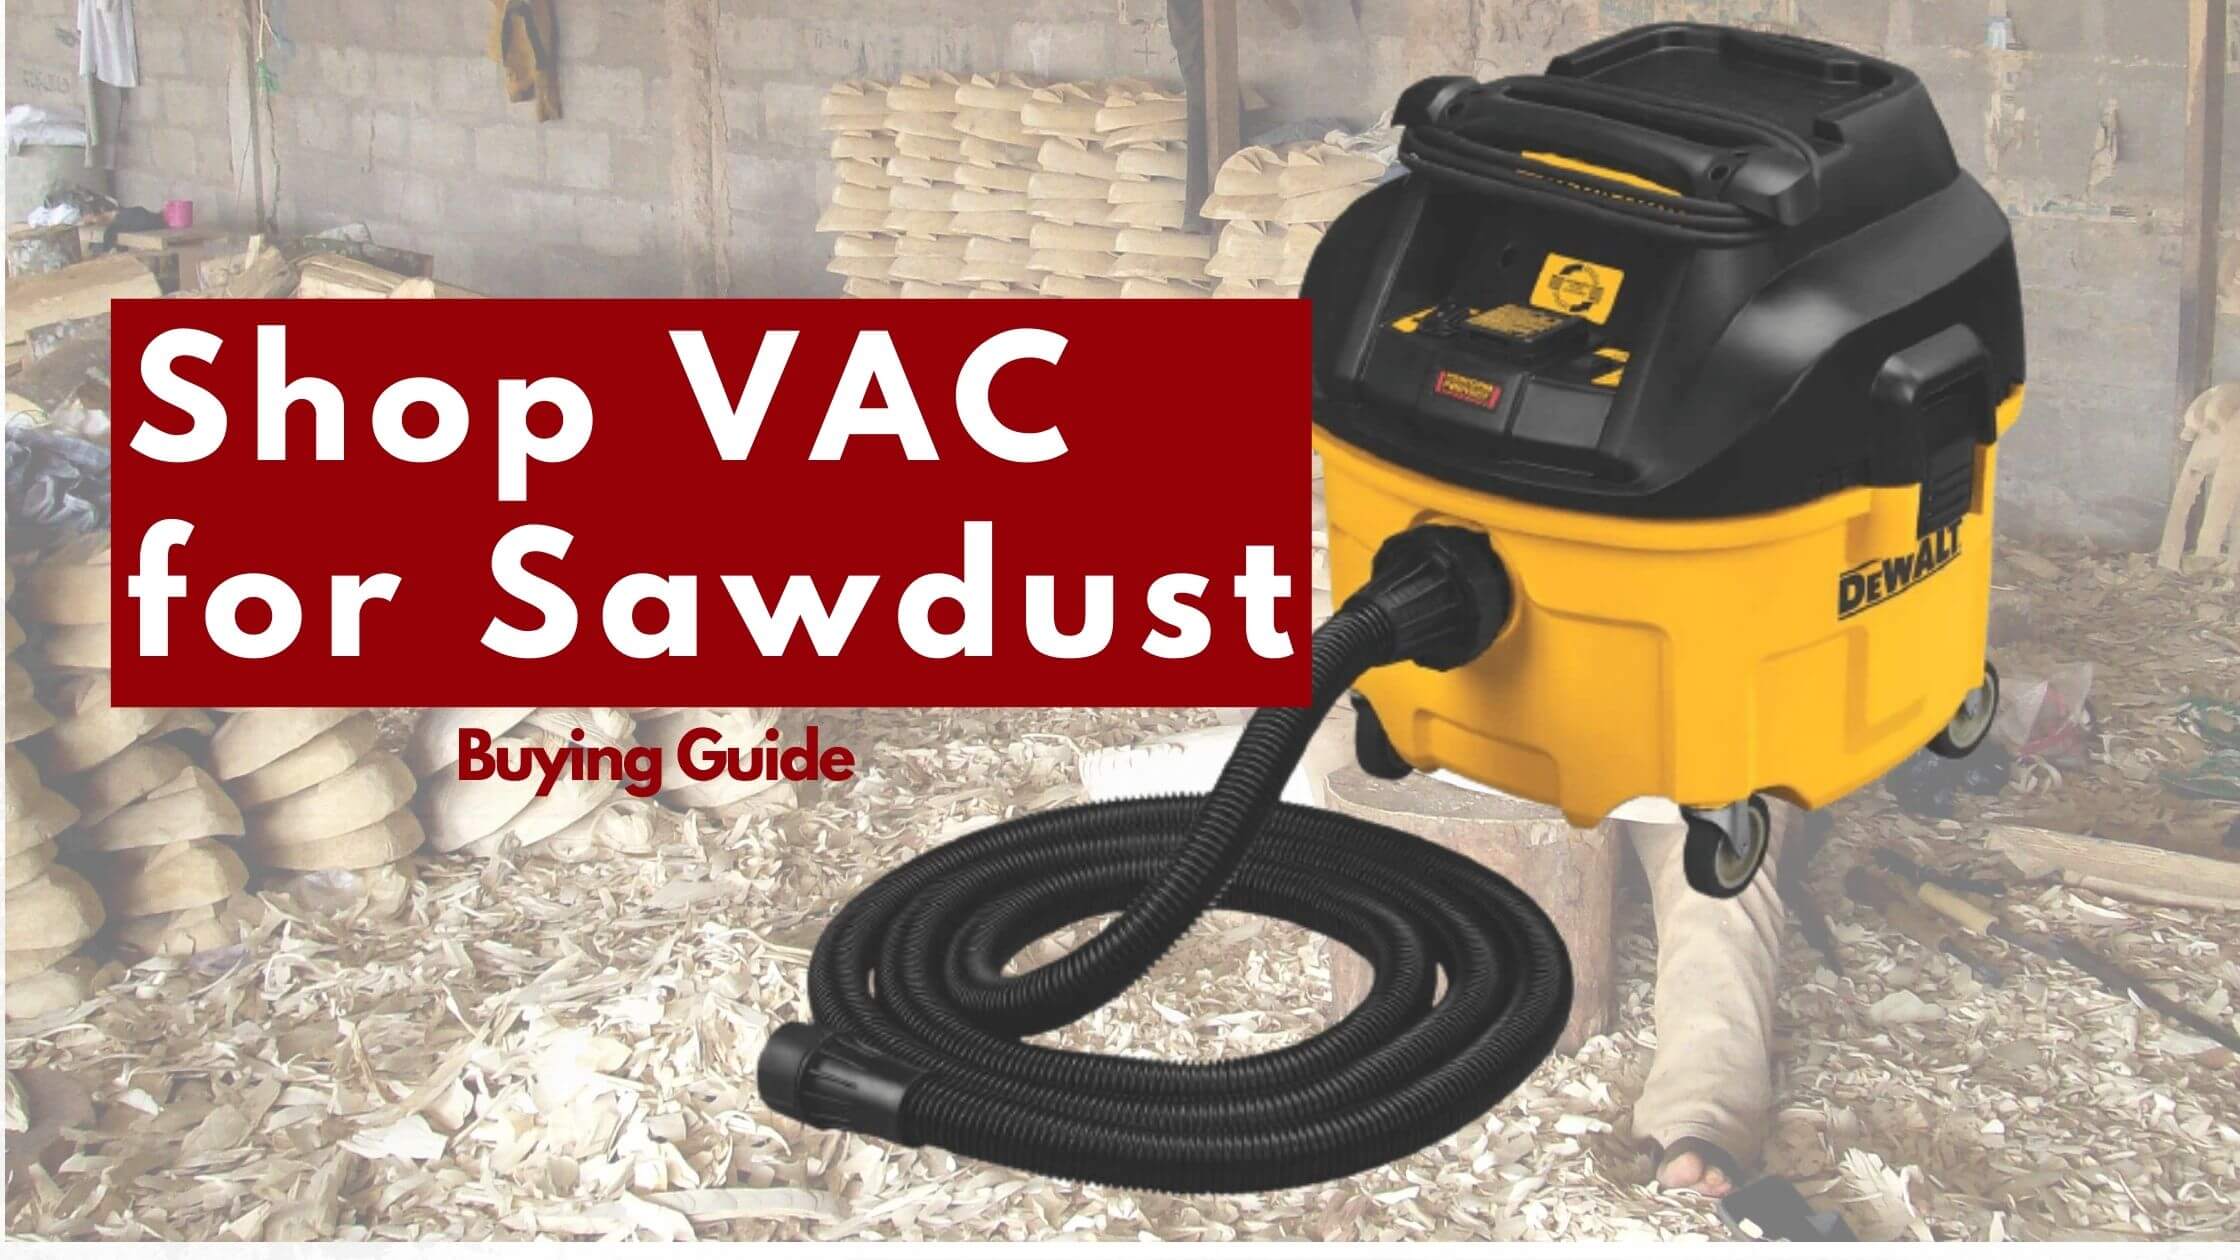 Best Shop VAC for Sawdust – DEWALT DWV010 8-Gallon – Dust Extractor Review